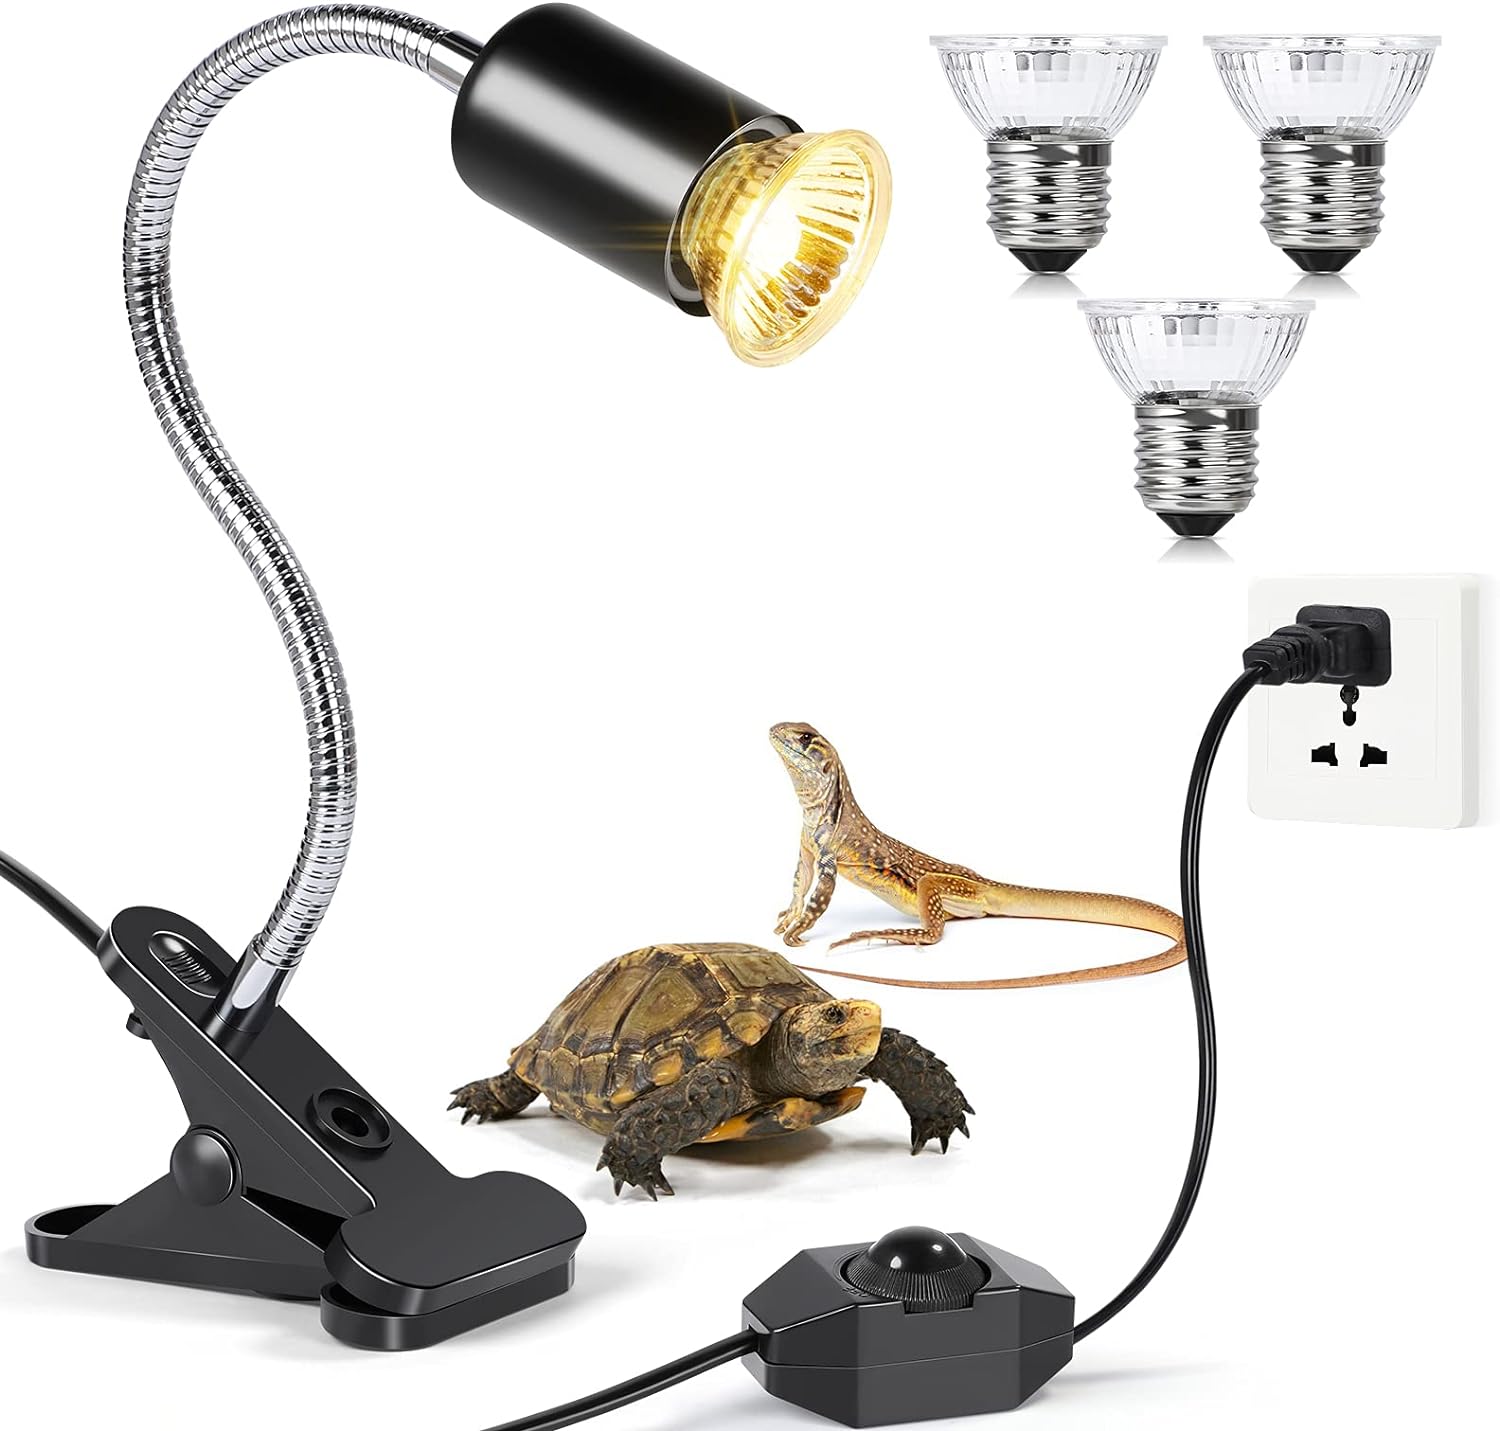 No Bulb Included US Plug 110V Reptile Clamp Lamp Fixture E27 UVA UVB Heat Light Bulb Holder Ceramic Socket Safety Cover for Reptile Terrarium Basking